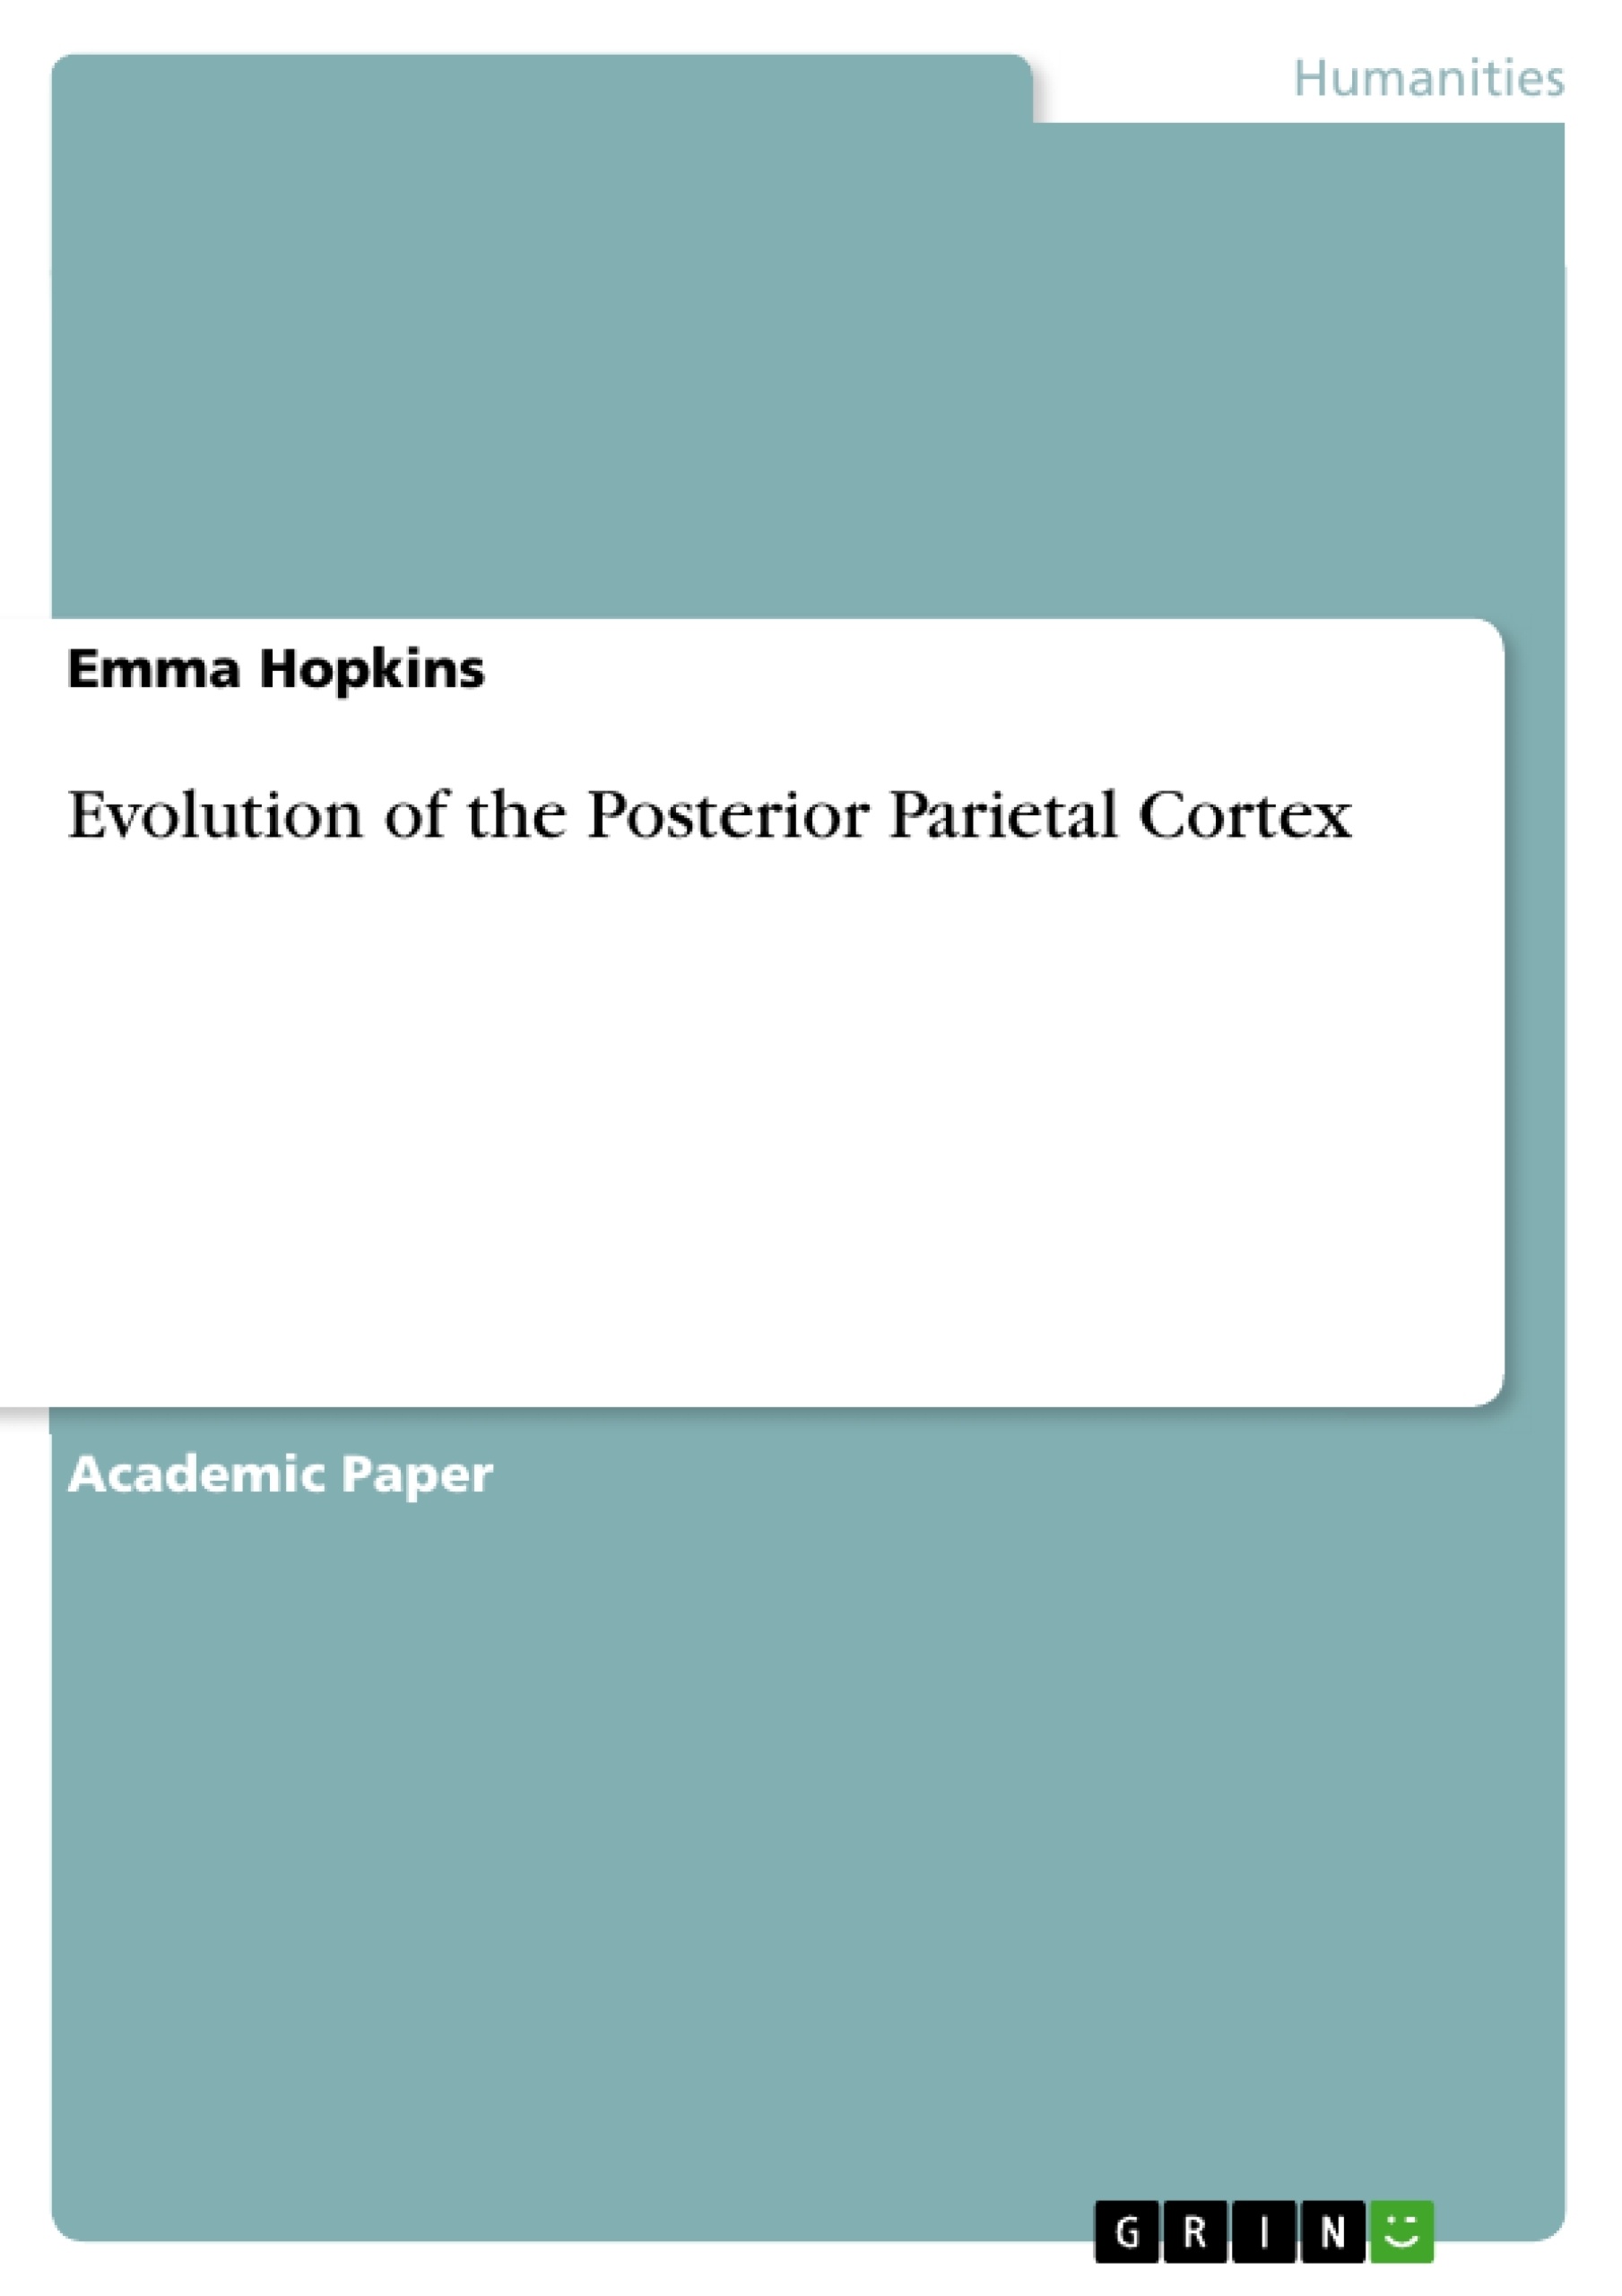 Title: Evolution of the Posterior Parietal Cortex